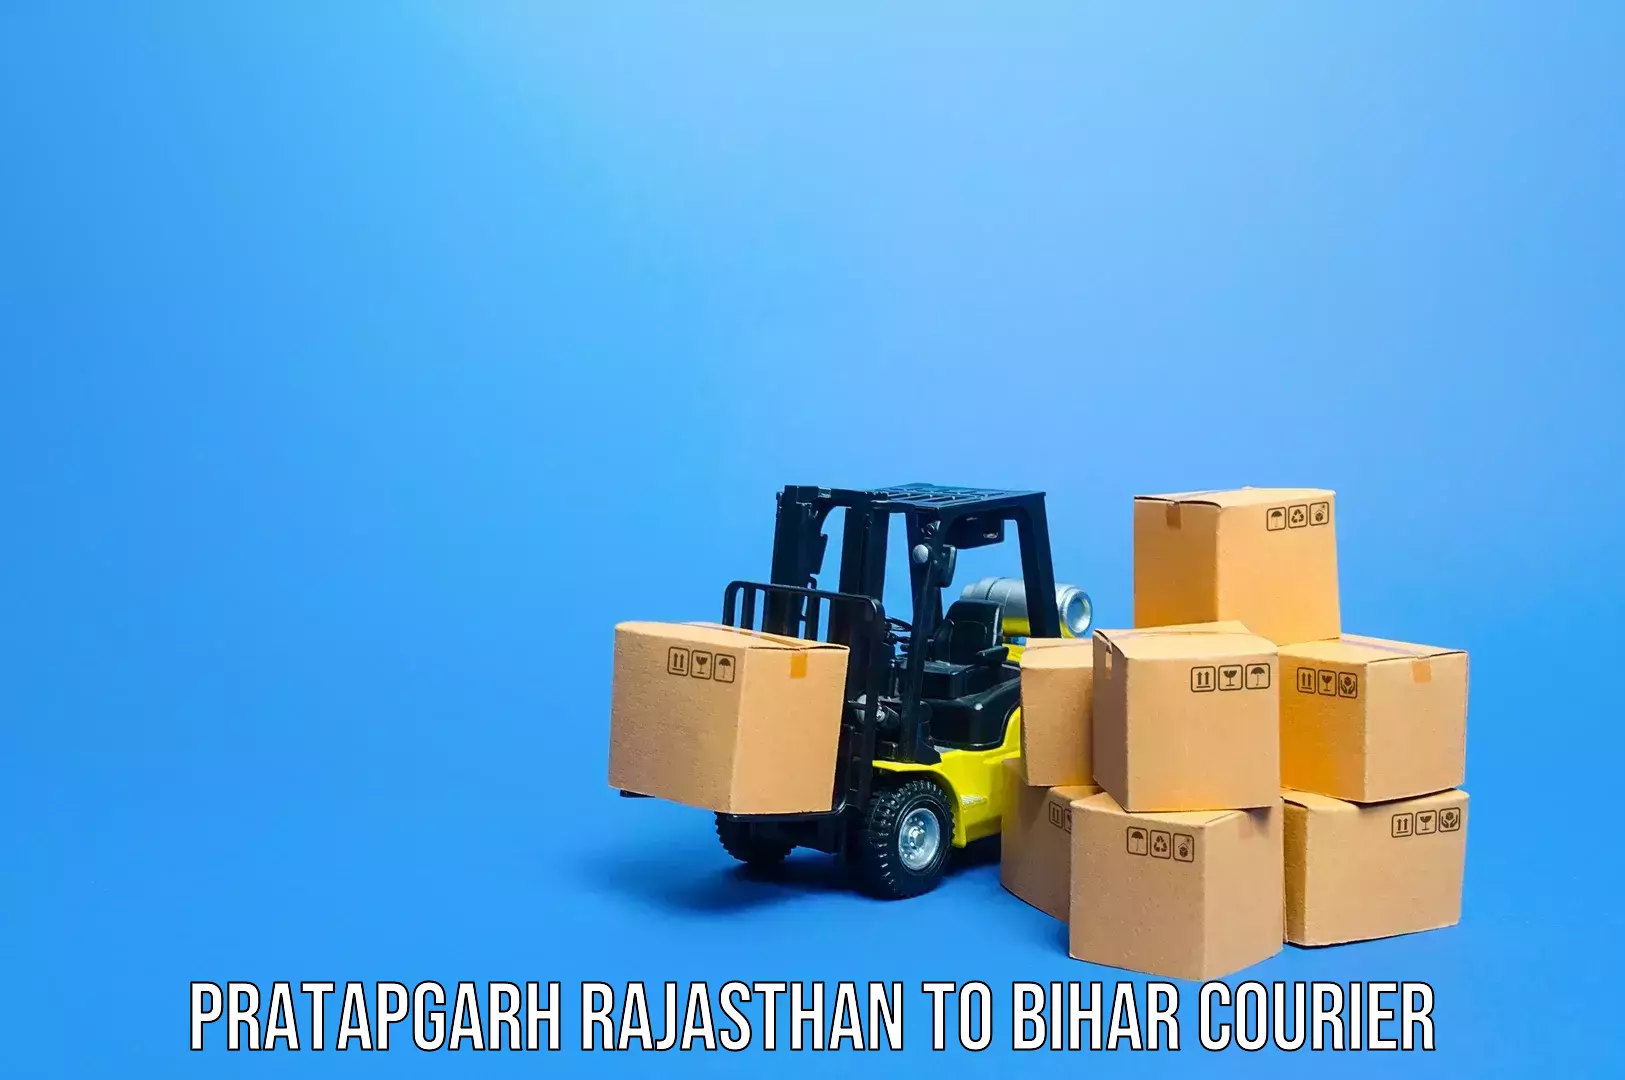 Luggage delivery system Pratapgarh Rajasthan to Sandesh